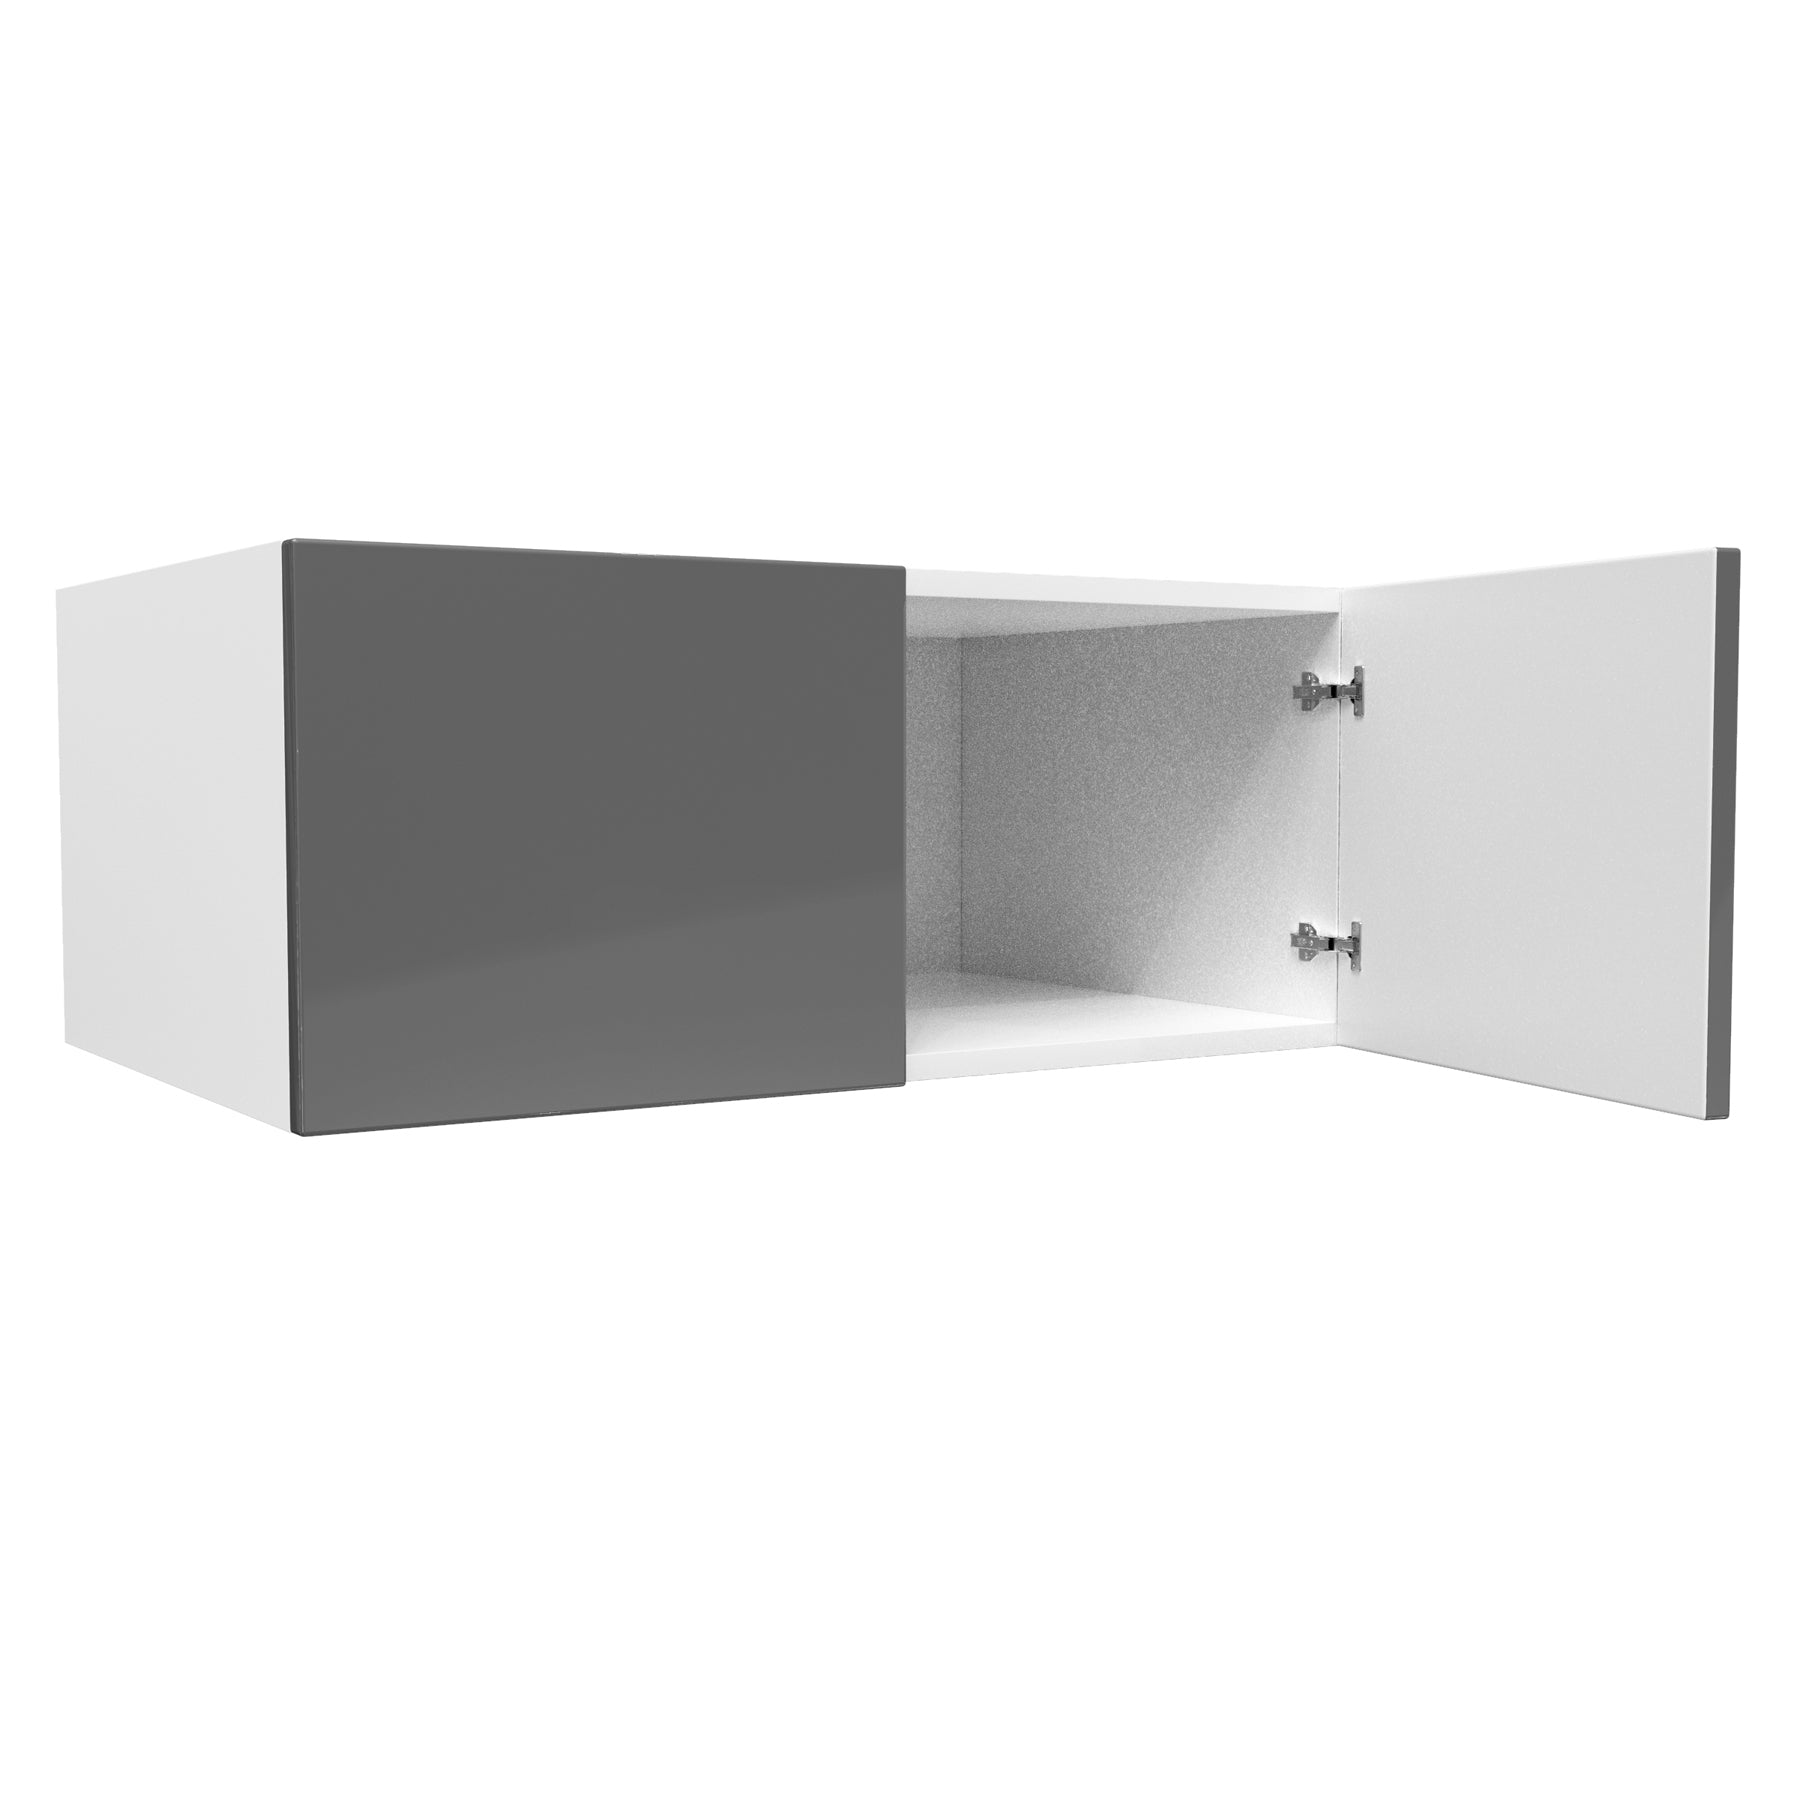 24 inch Deep Wall Cabinet | Milano Slate | 36W x 15H x 24D